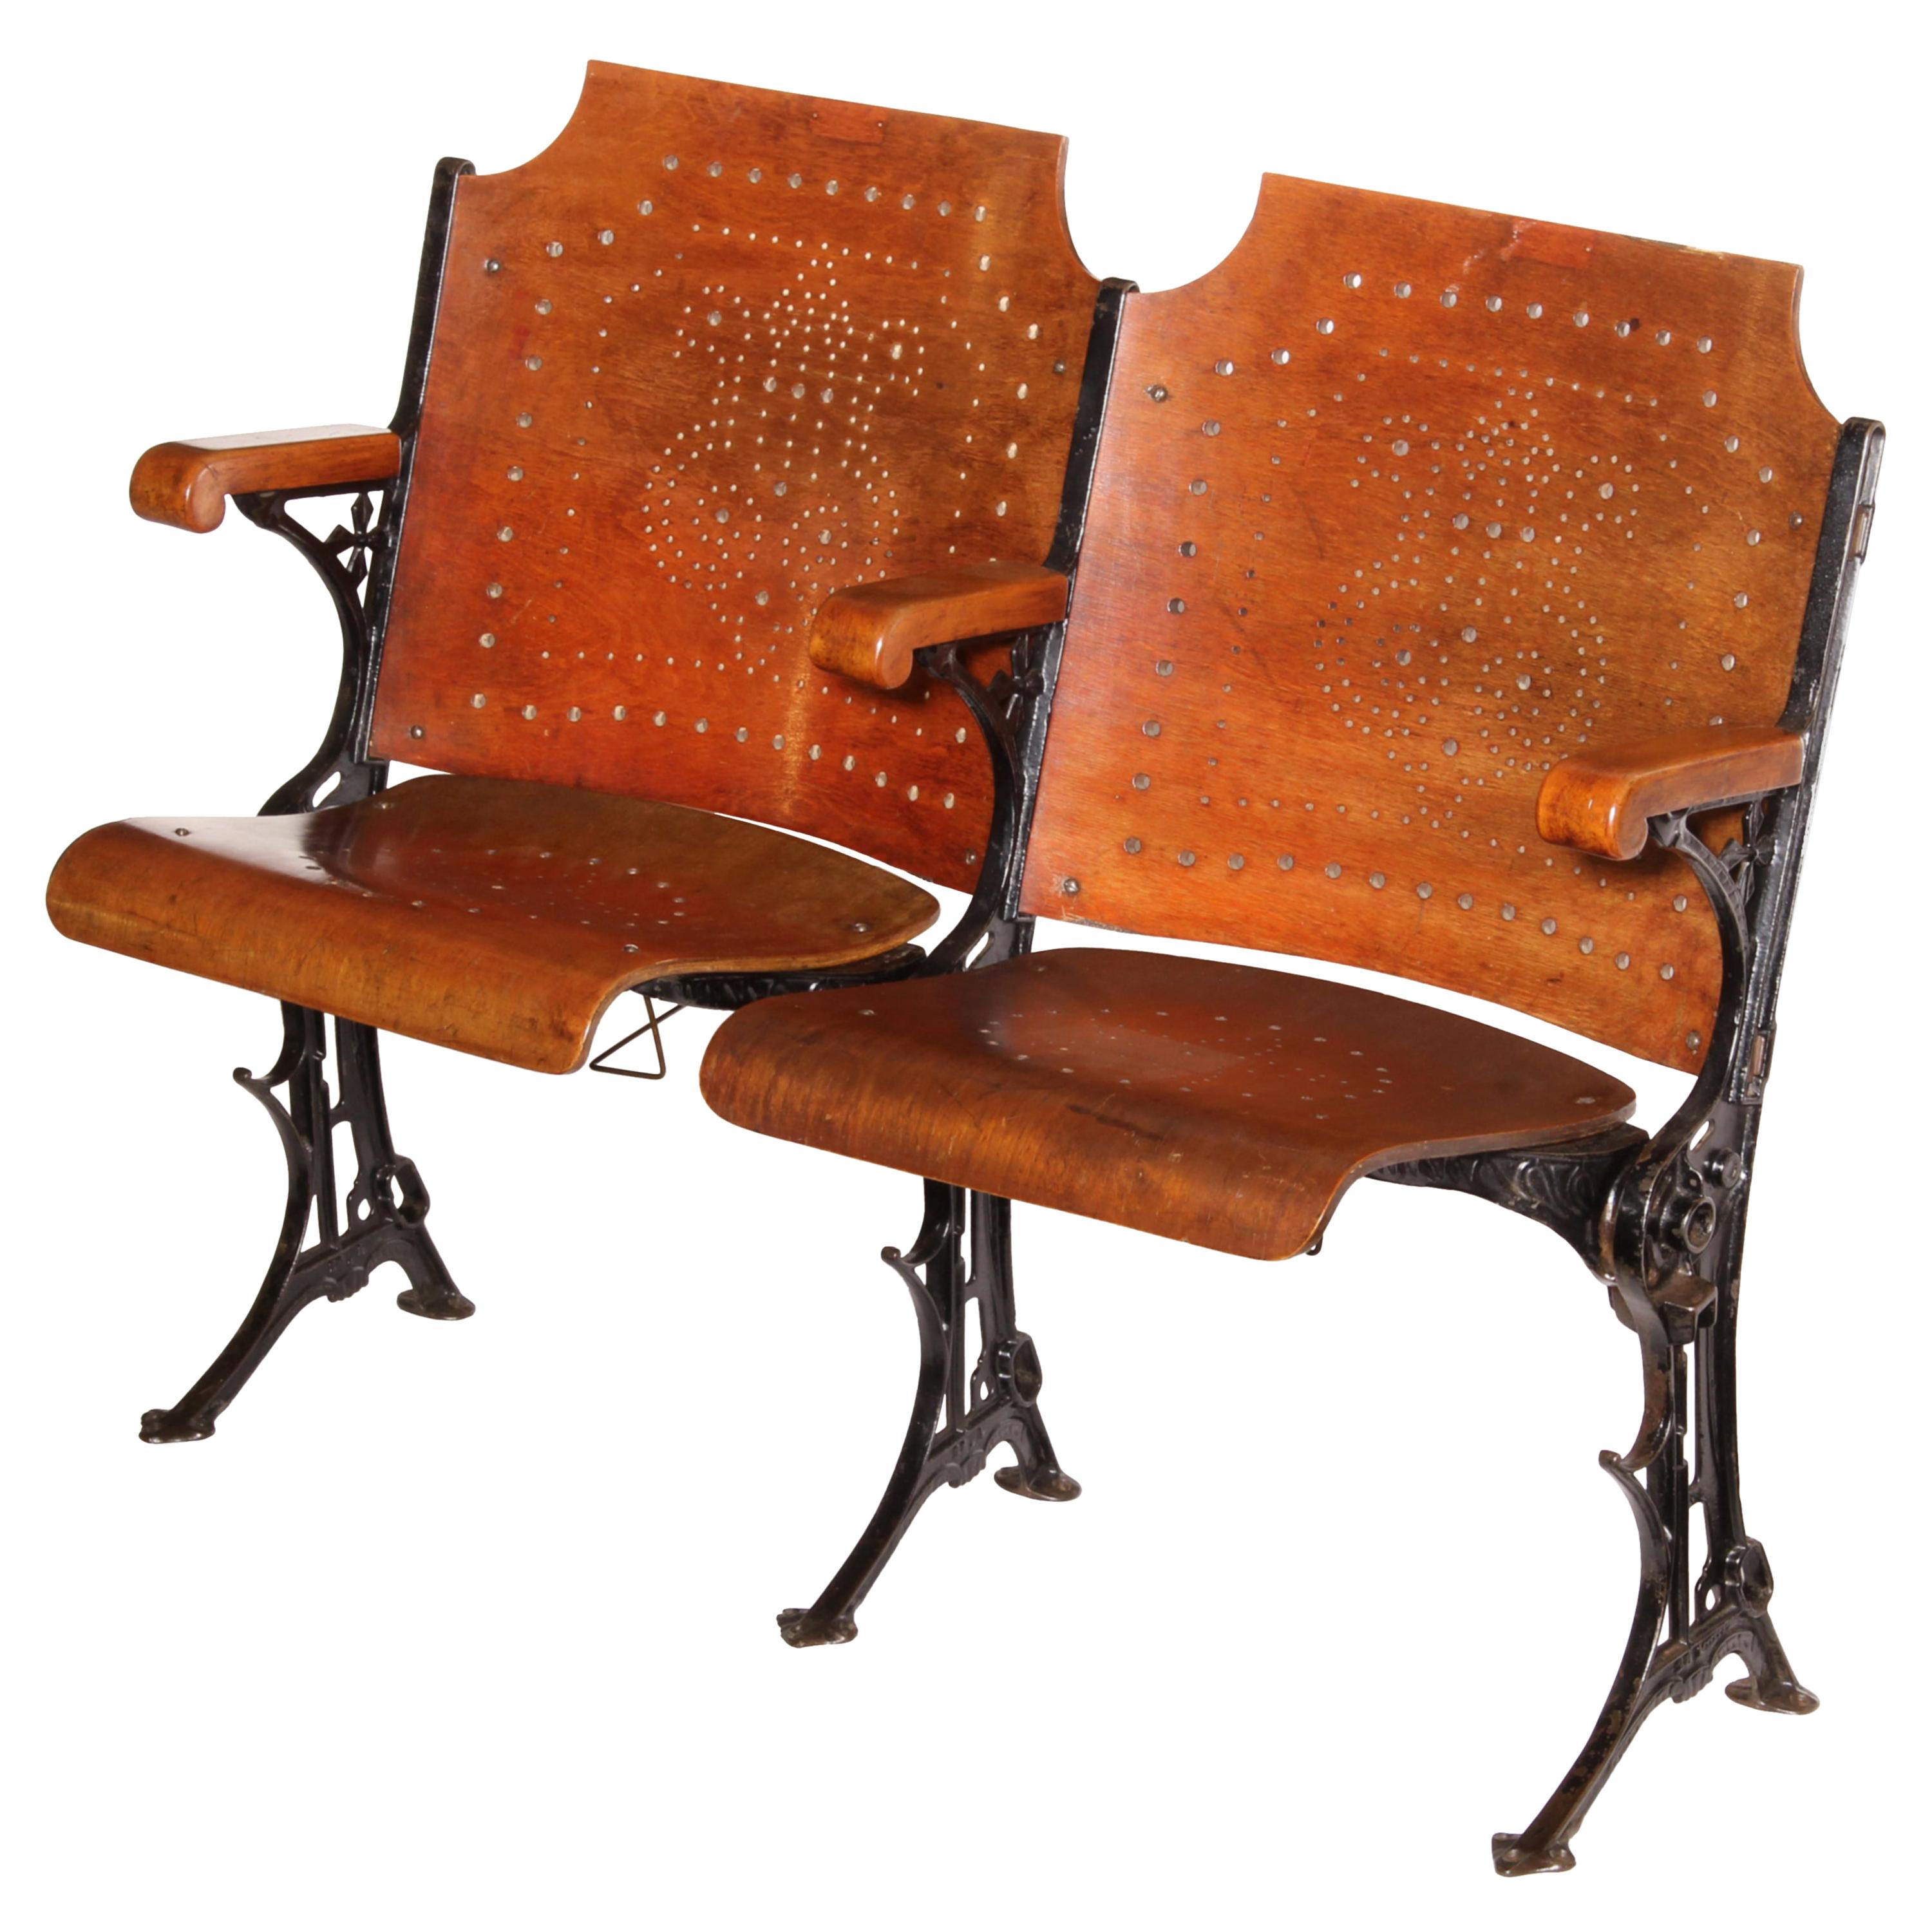 Vintage Original Wood and Steel Folding Theater Seats, Set of 2